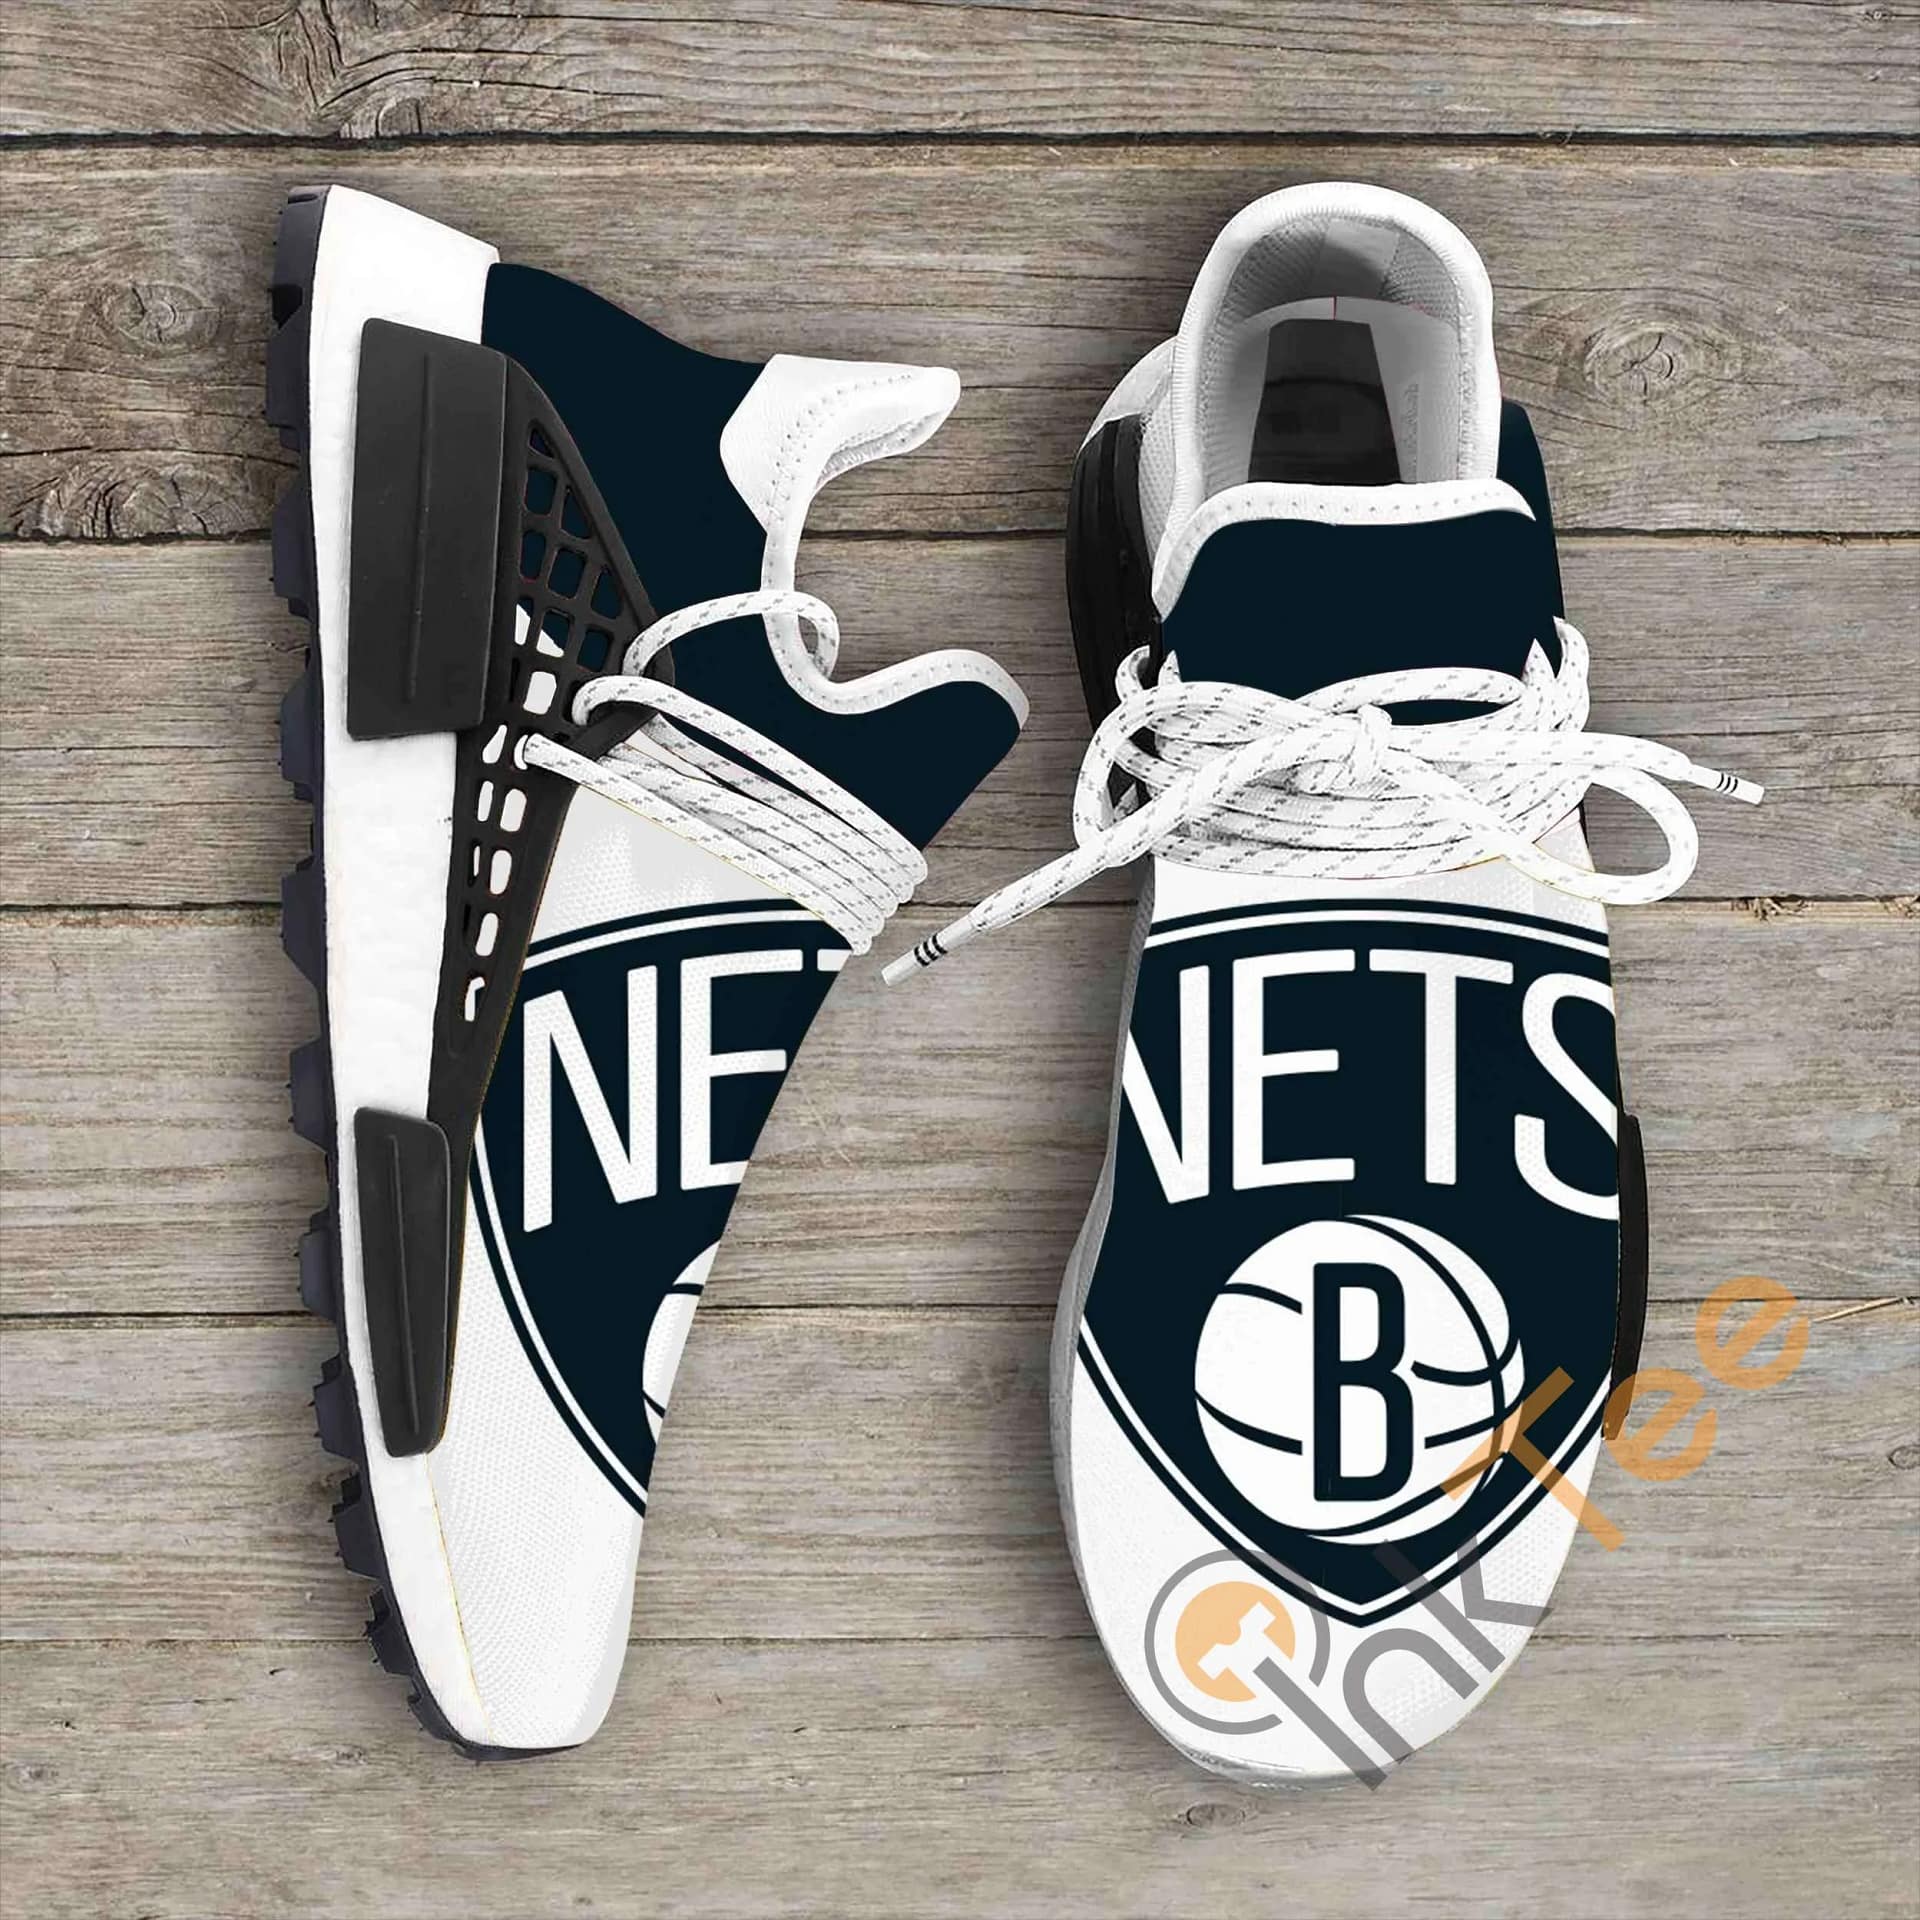 Brooklyn Nets Nba Ha02 Nmd Human Shoes